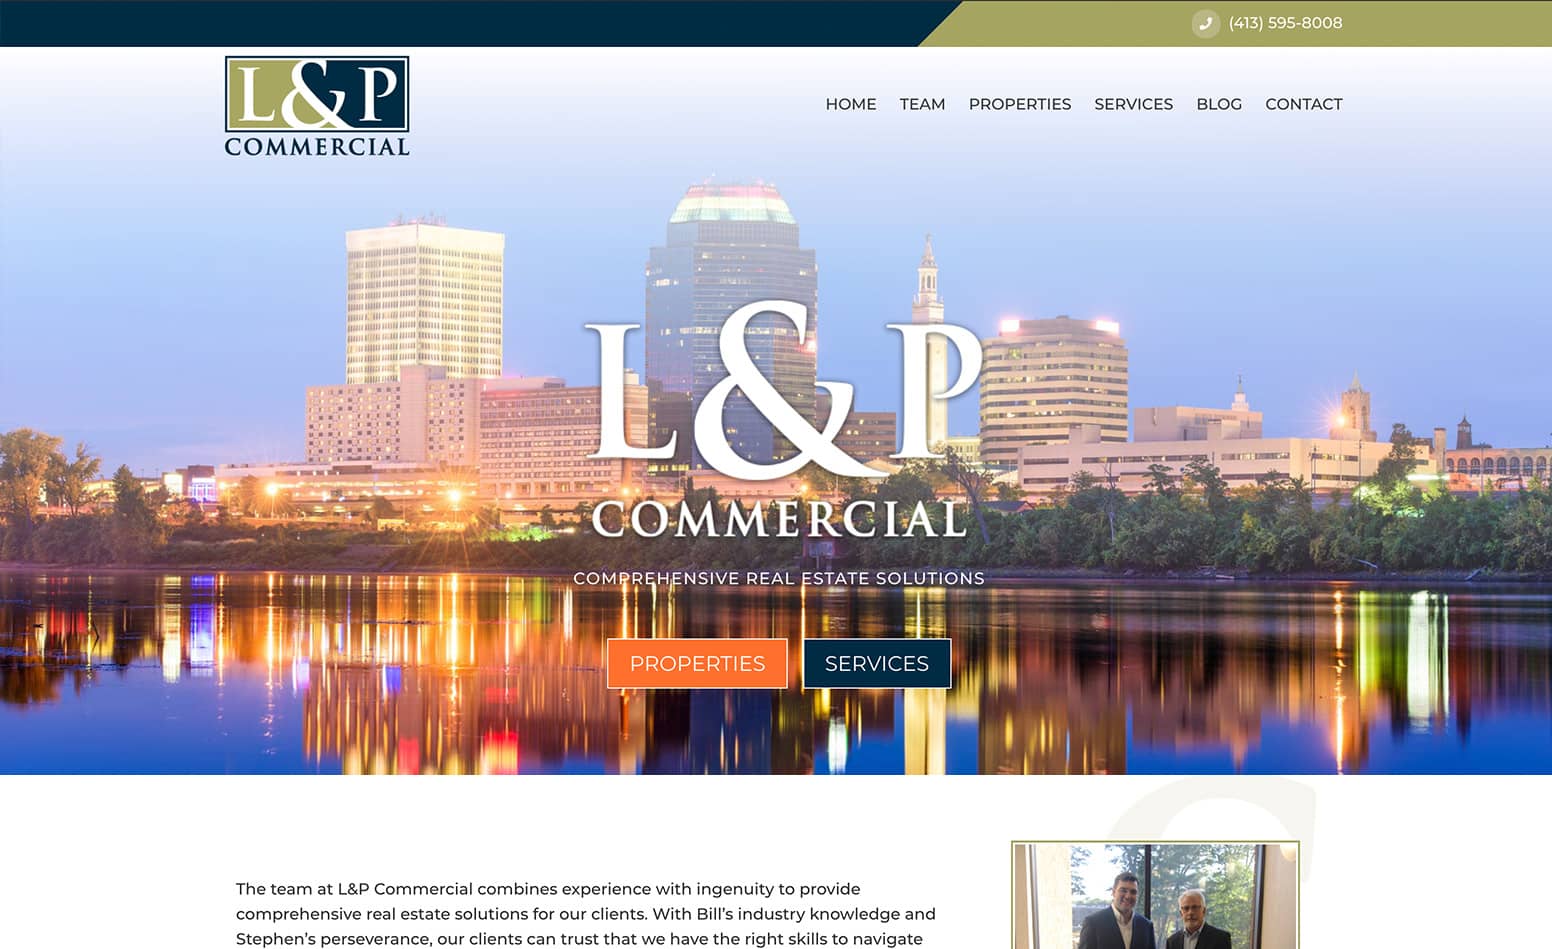 L&P Commercial website design, custom website design Western MA, website design Northern CT, branding, social media marketing MA